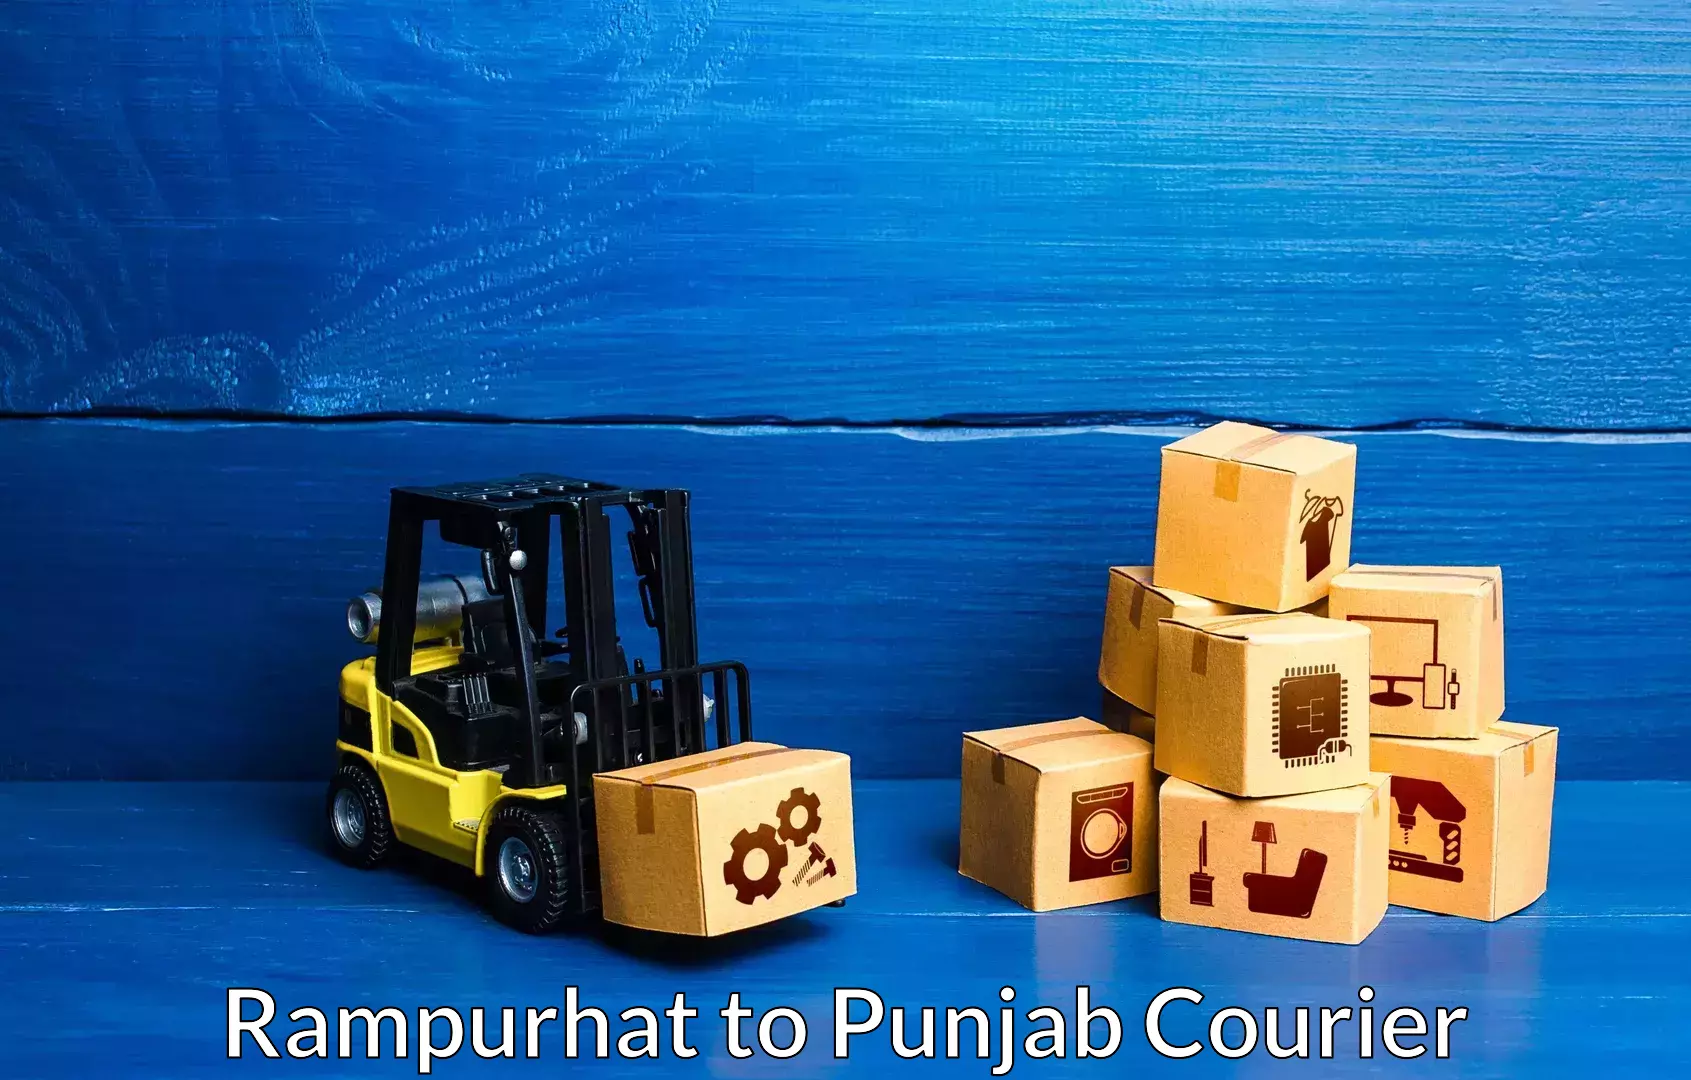 Professional moving company Rampurhat to Bathinda